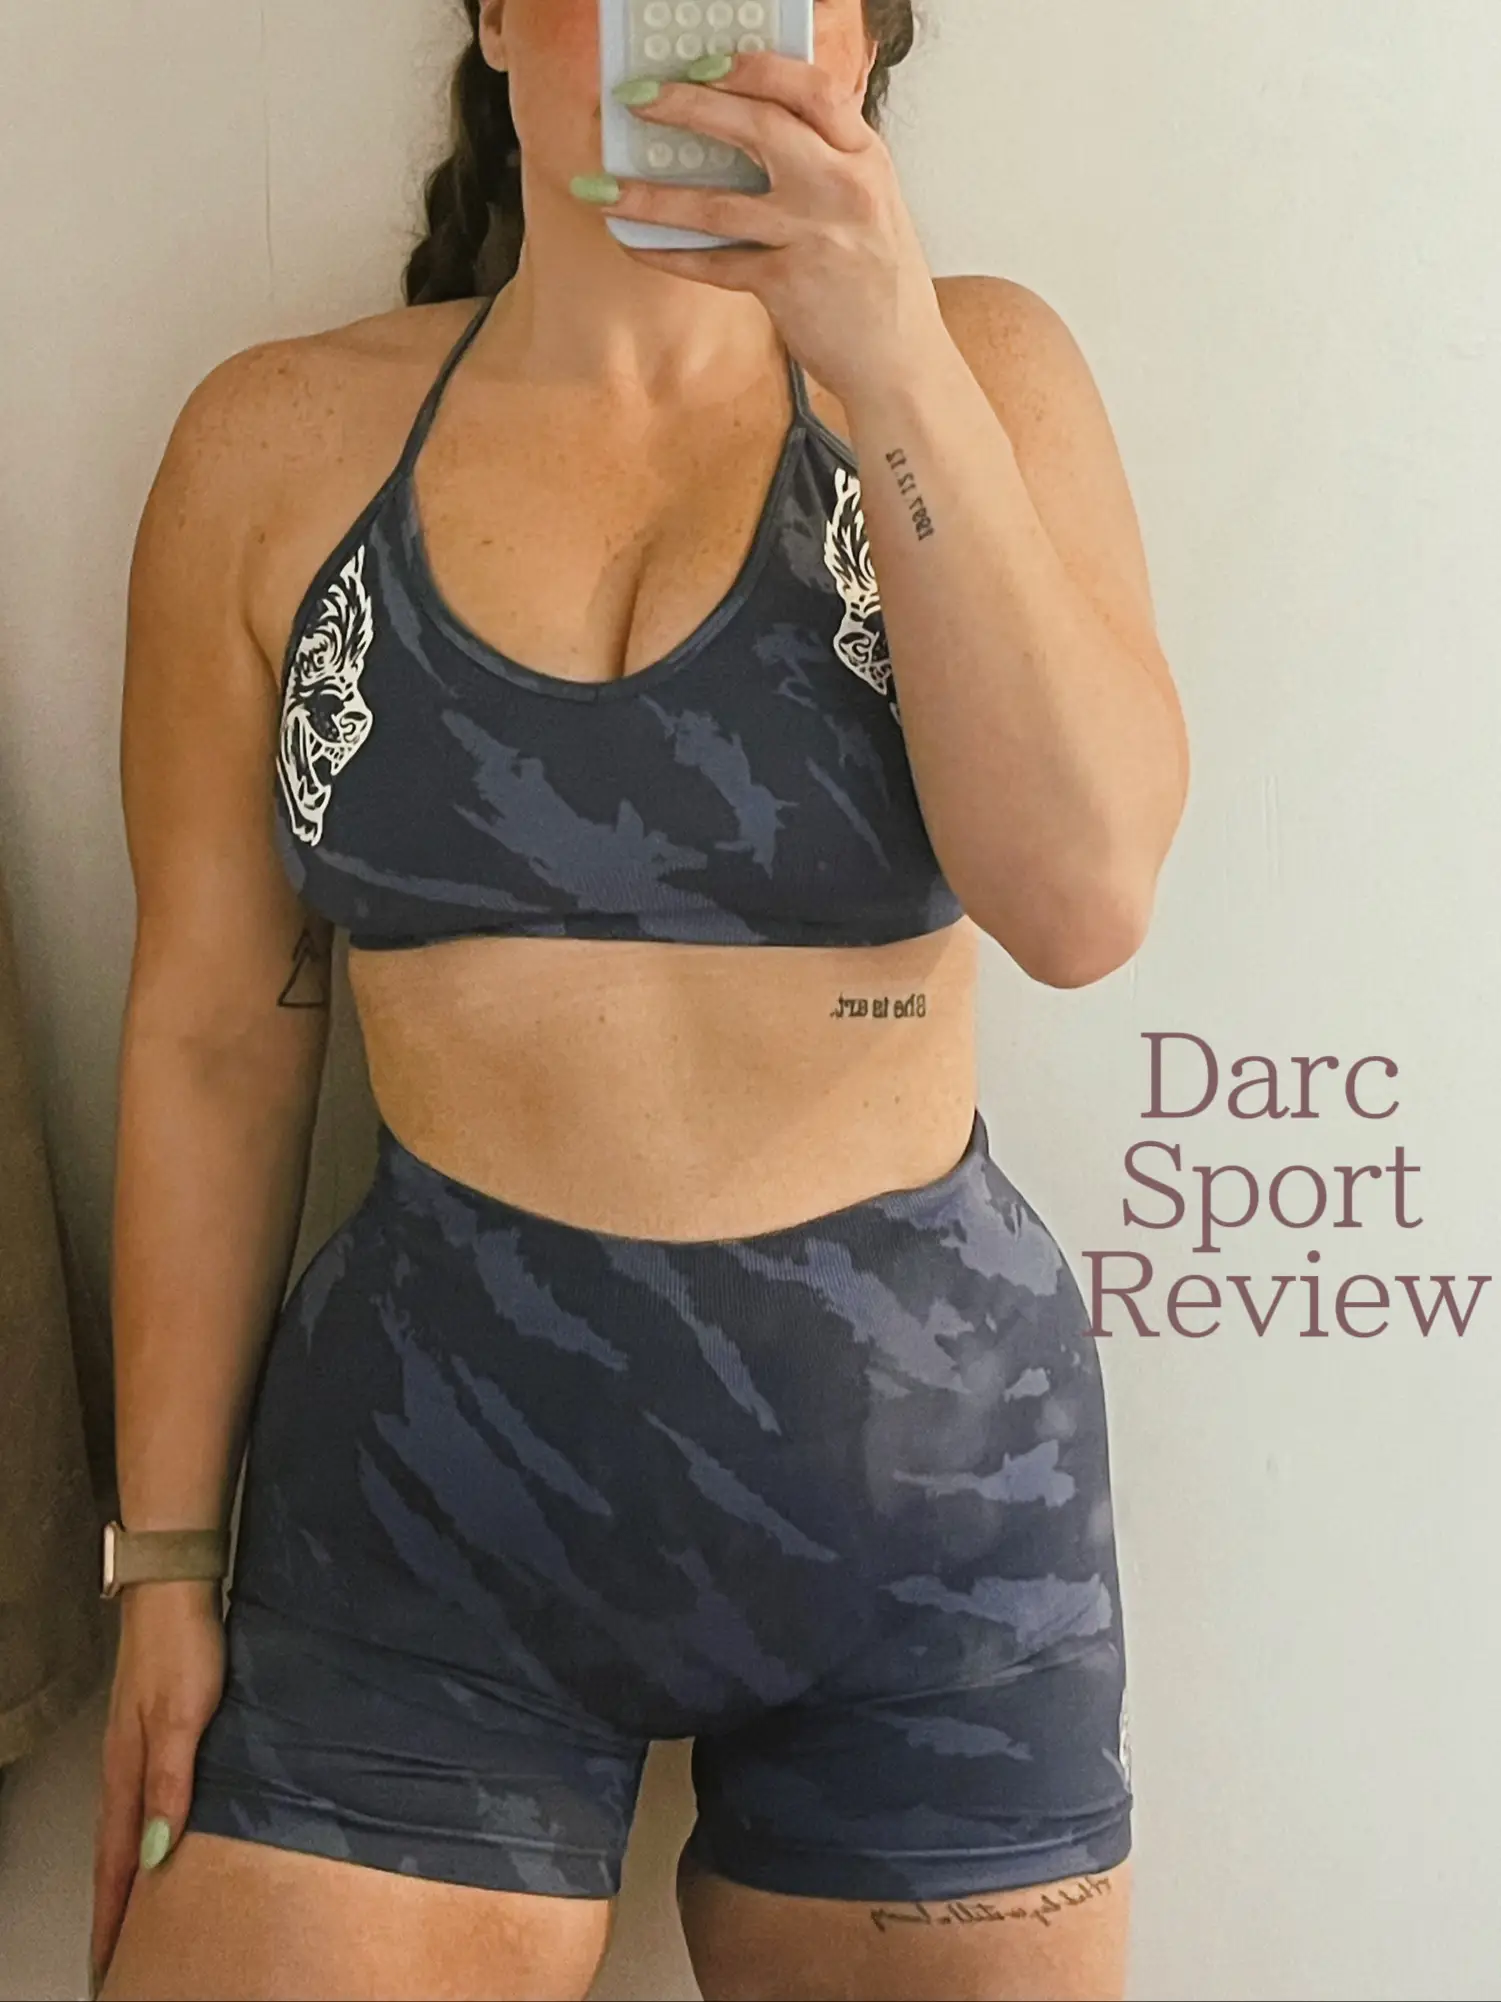 Darc Sport leggings - Athletic apparel